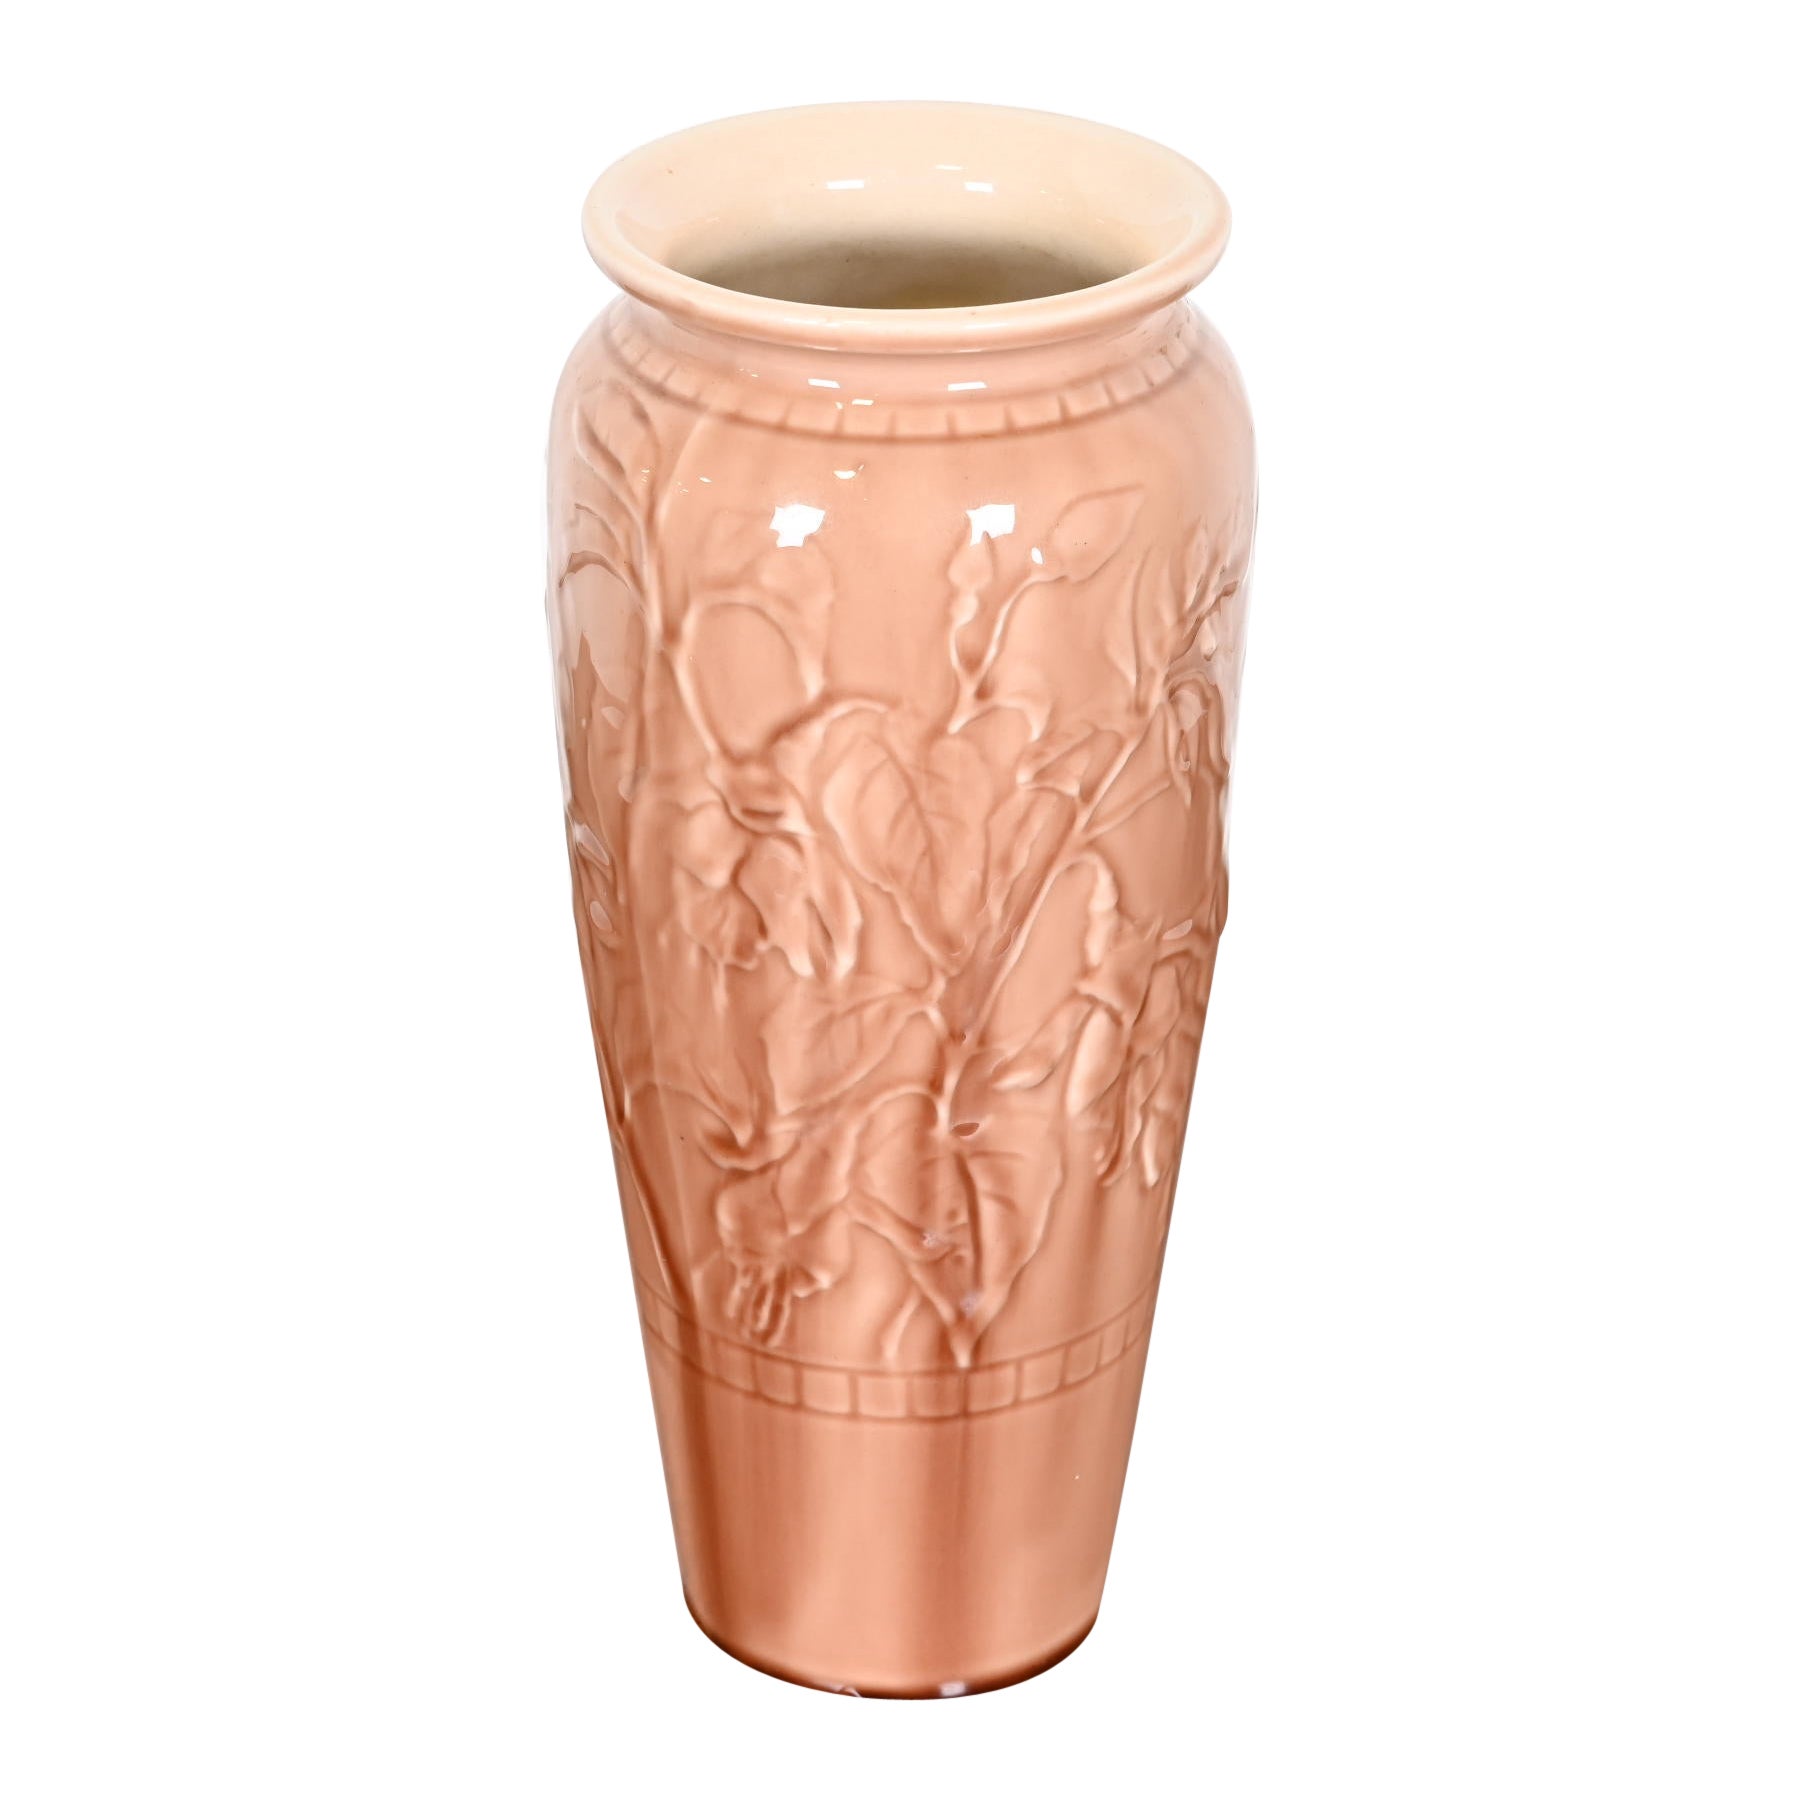 Rookwood Pottery Arts & Crafts Large Glazed Ceramic Lily Decorated Vase, 1944 For Sale